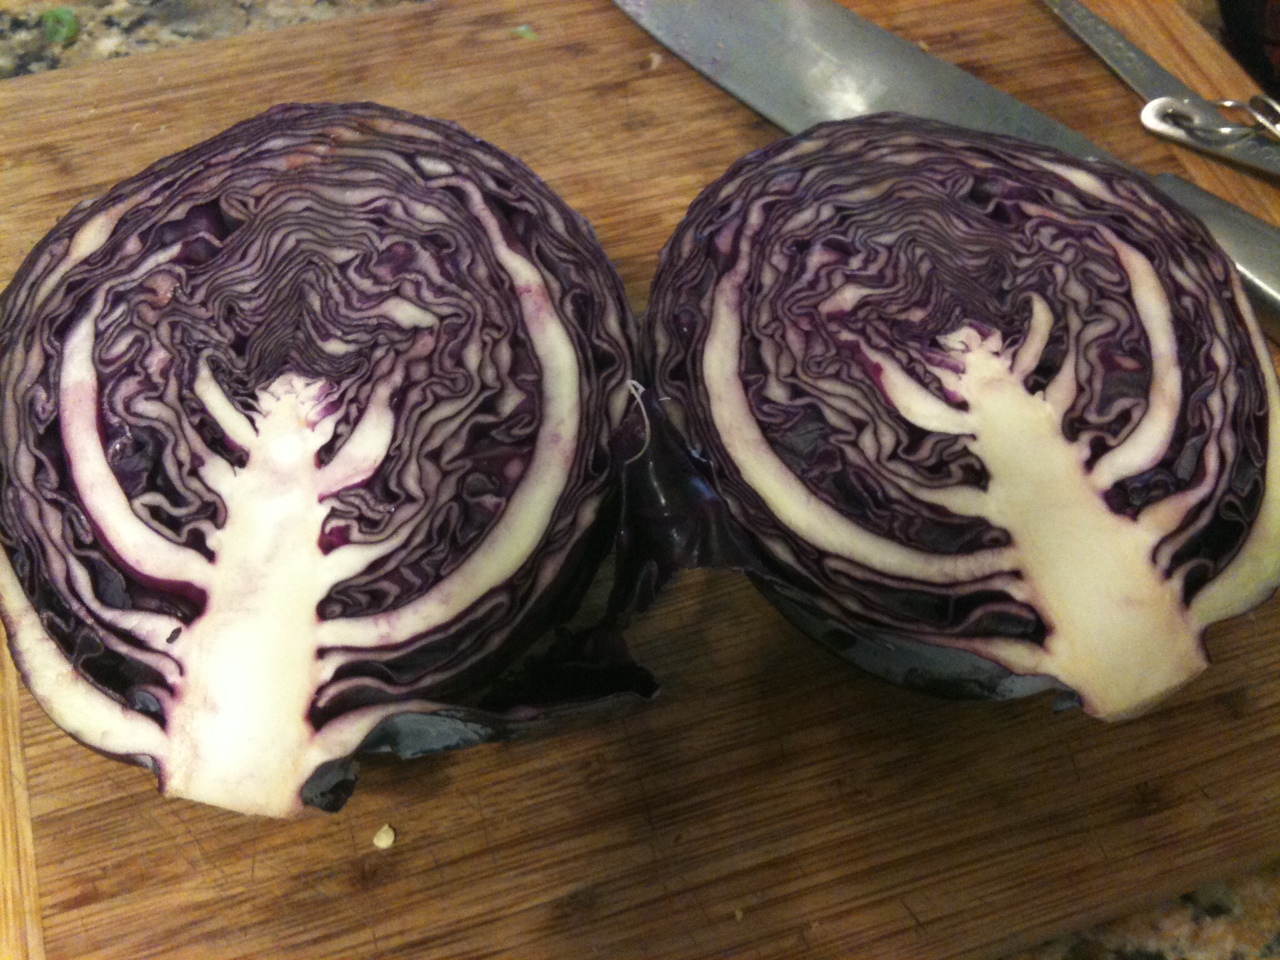 Cabbage Cut